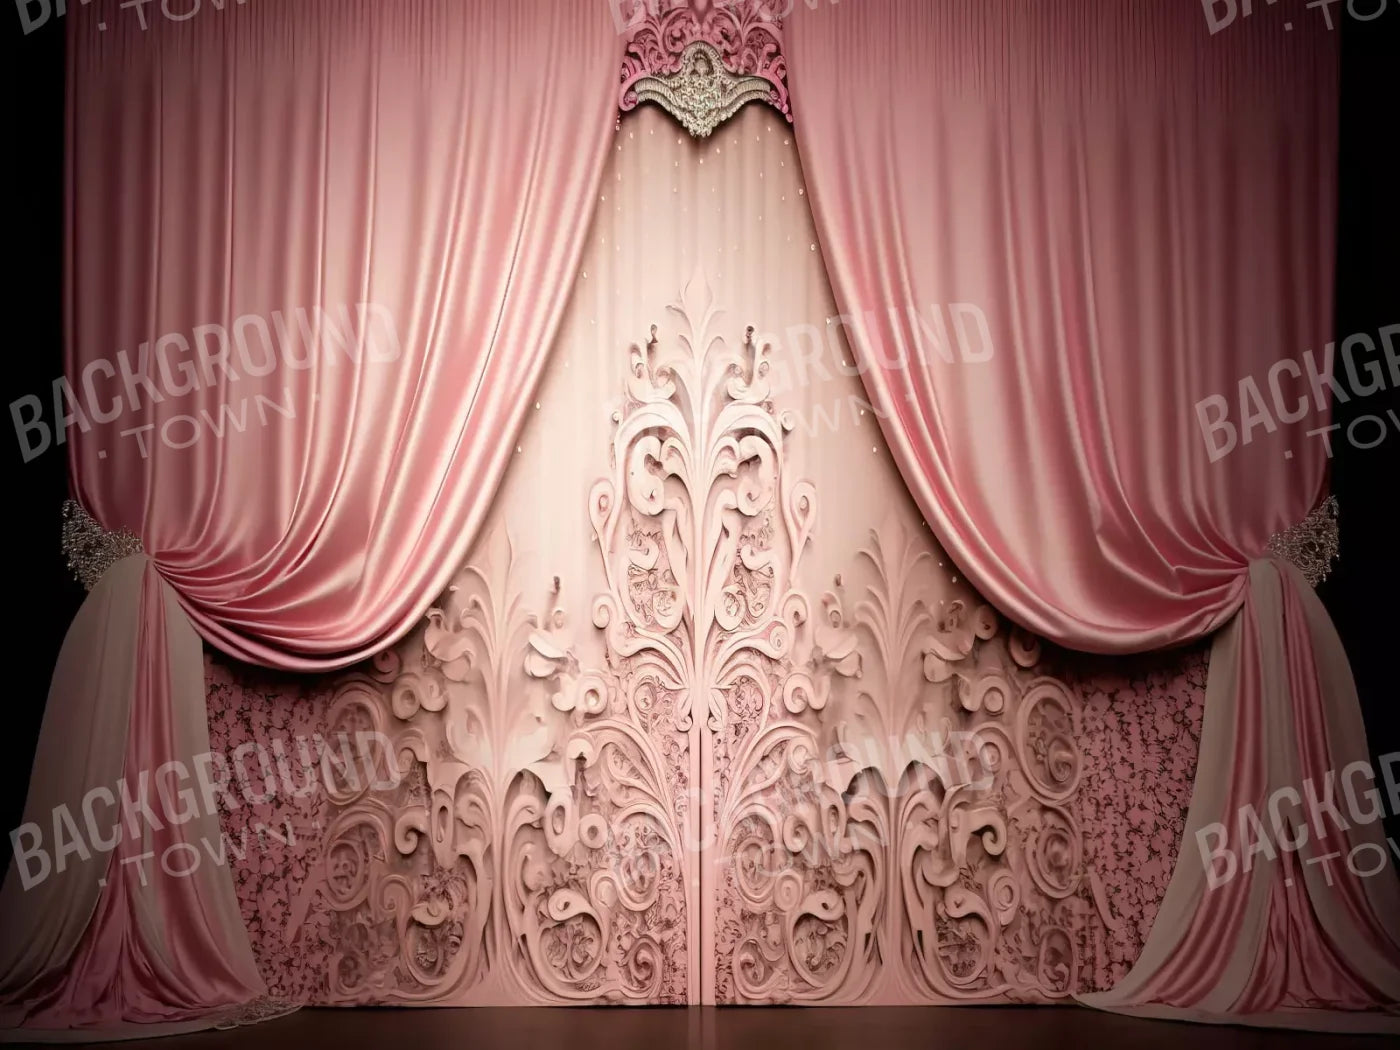 Doll House Curtains Ii 6’8X5’ Fleece (80 X 60 Inch) Backdrop